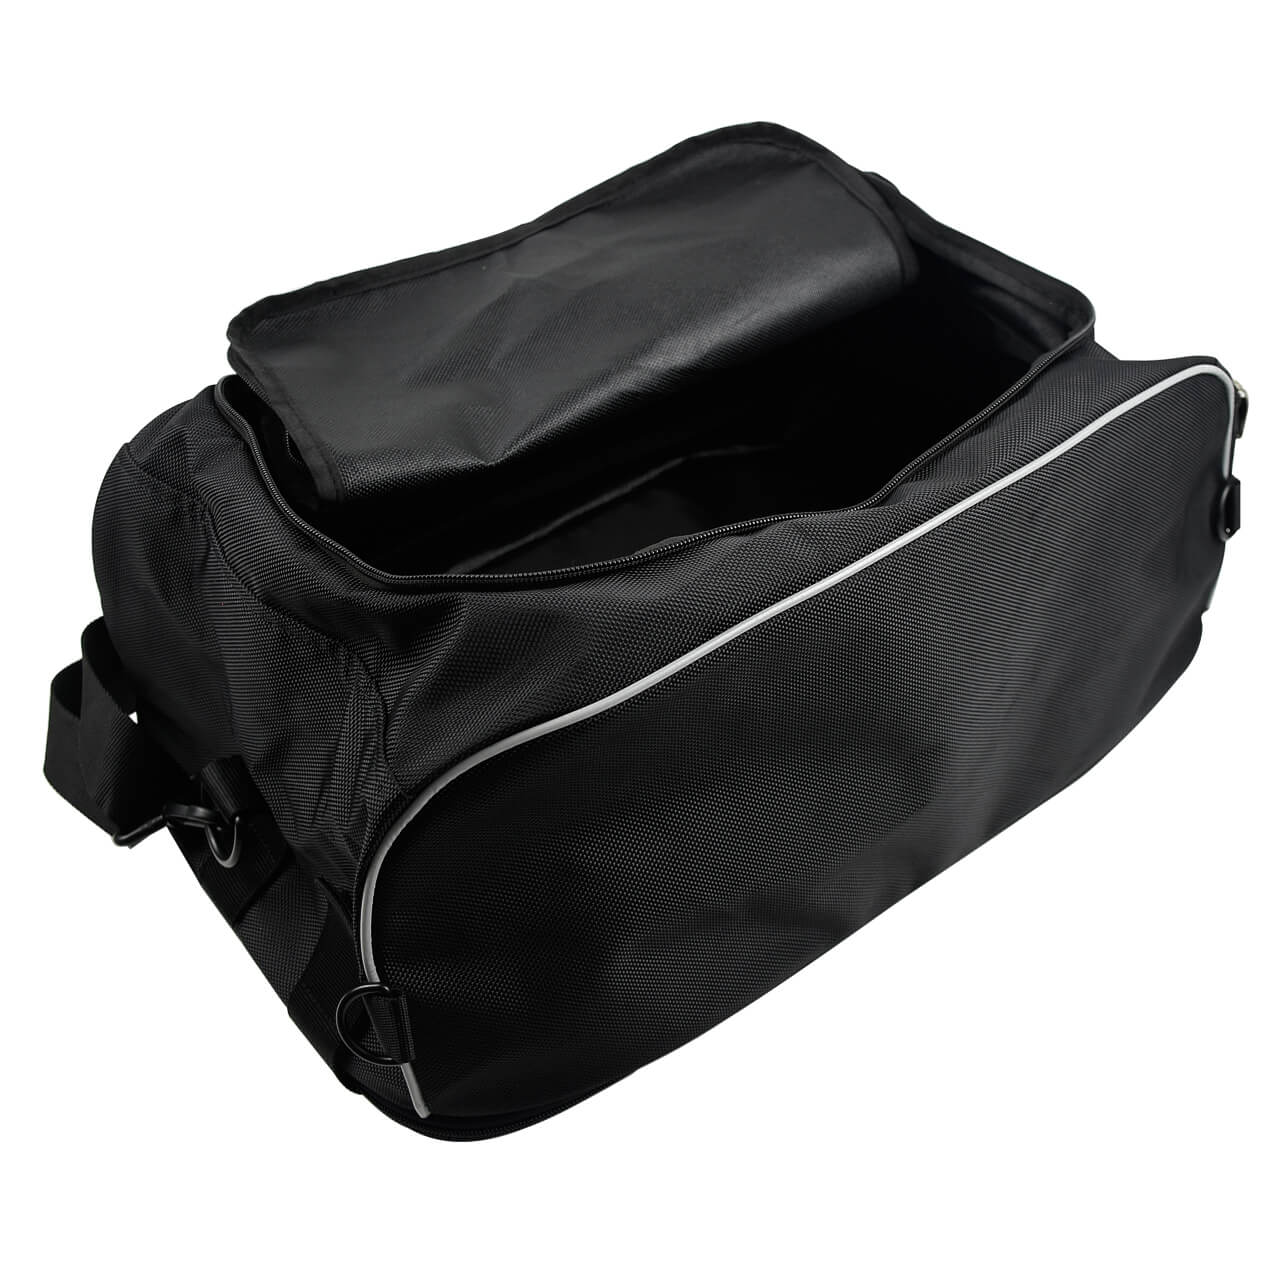 CB0077-motorcycle-waterproof-luggage-rack-bag-for-harley-touring